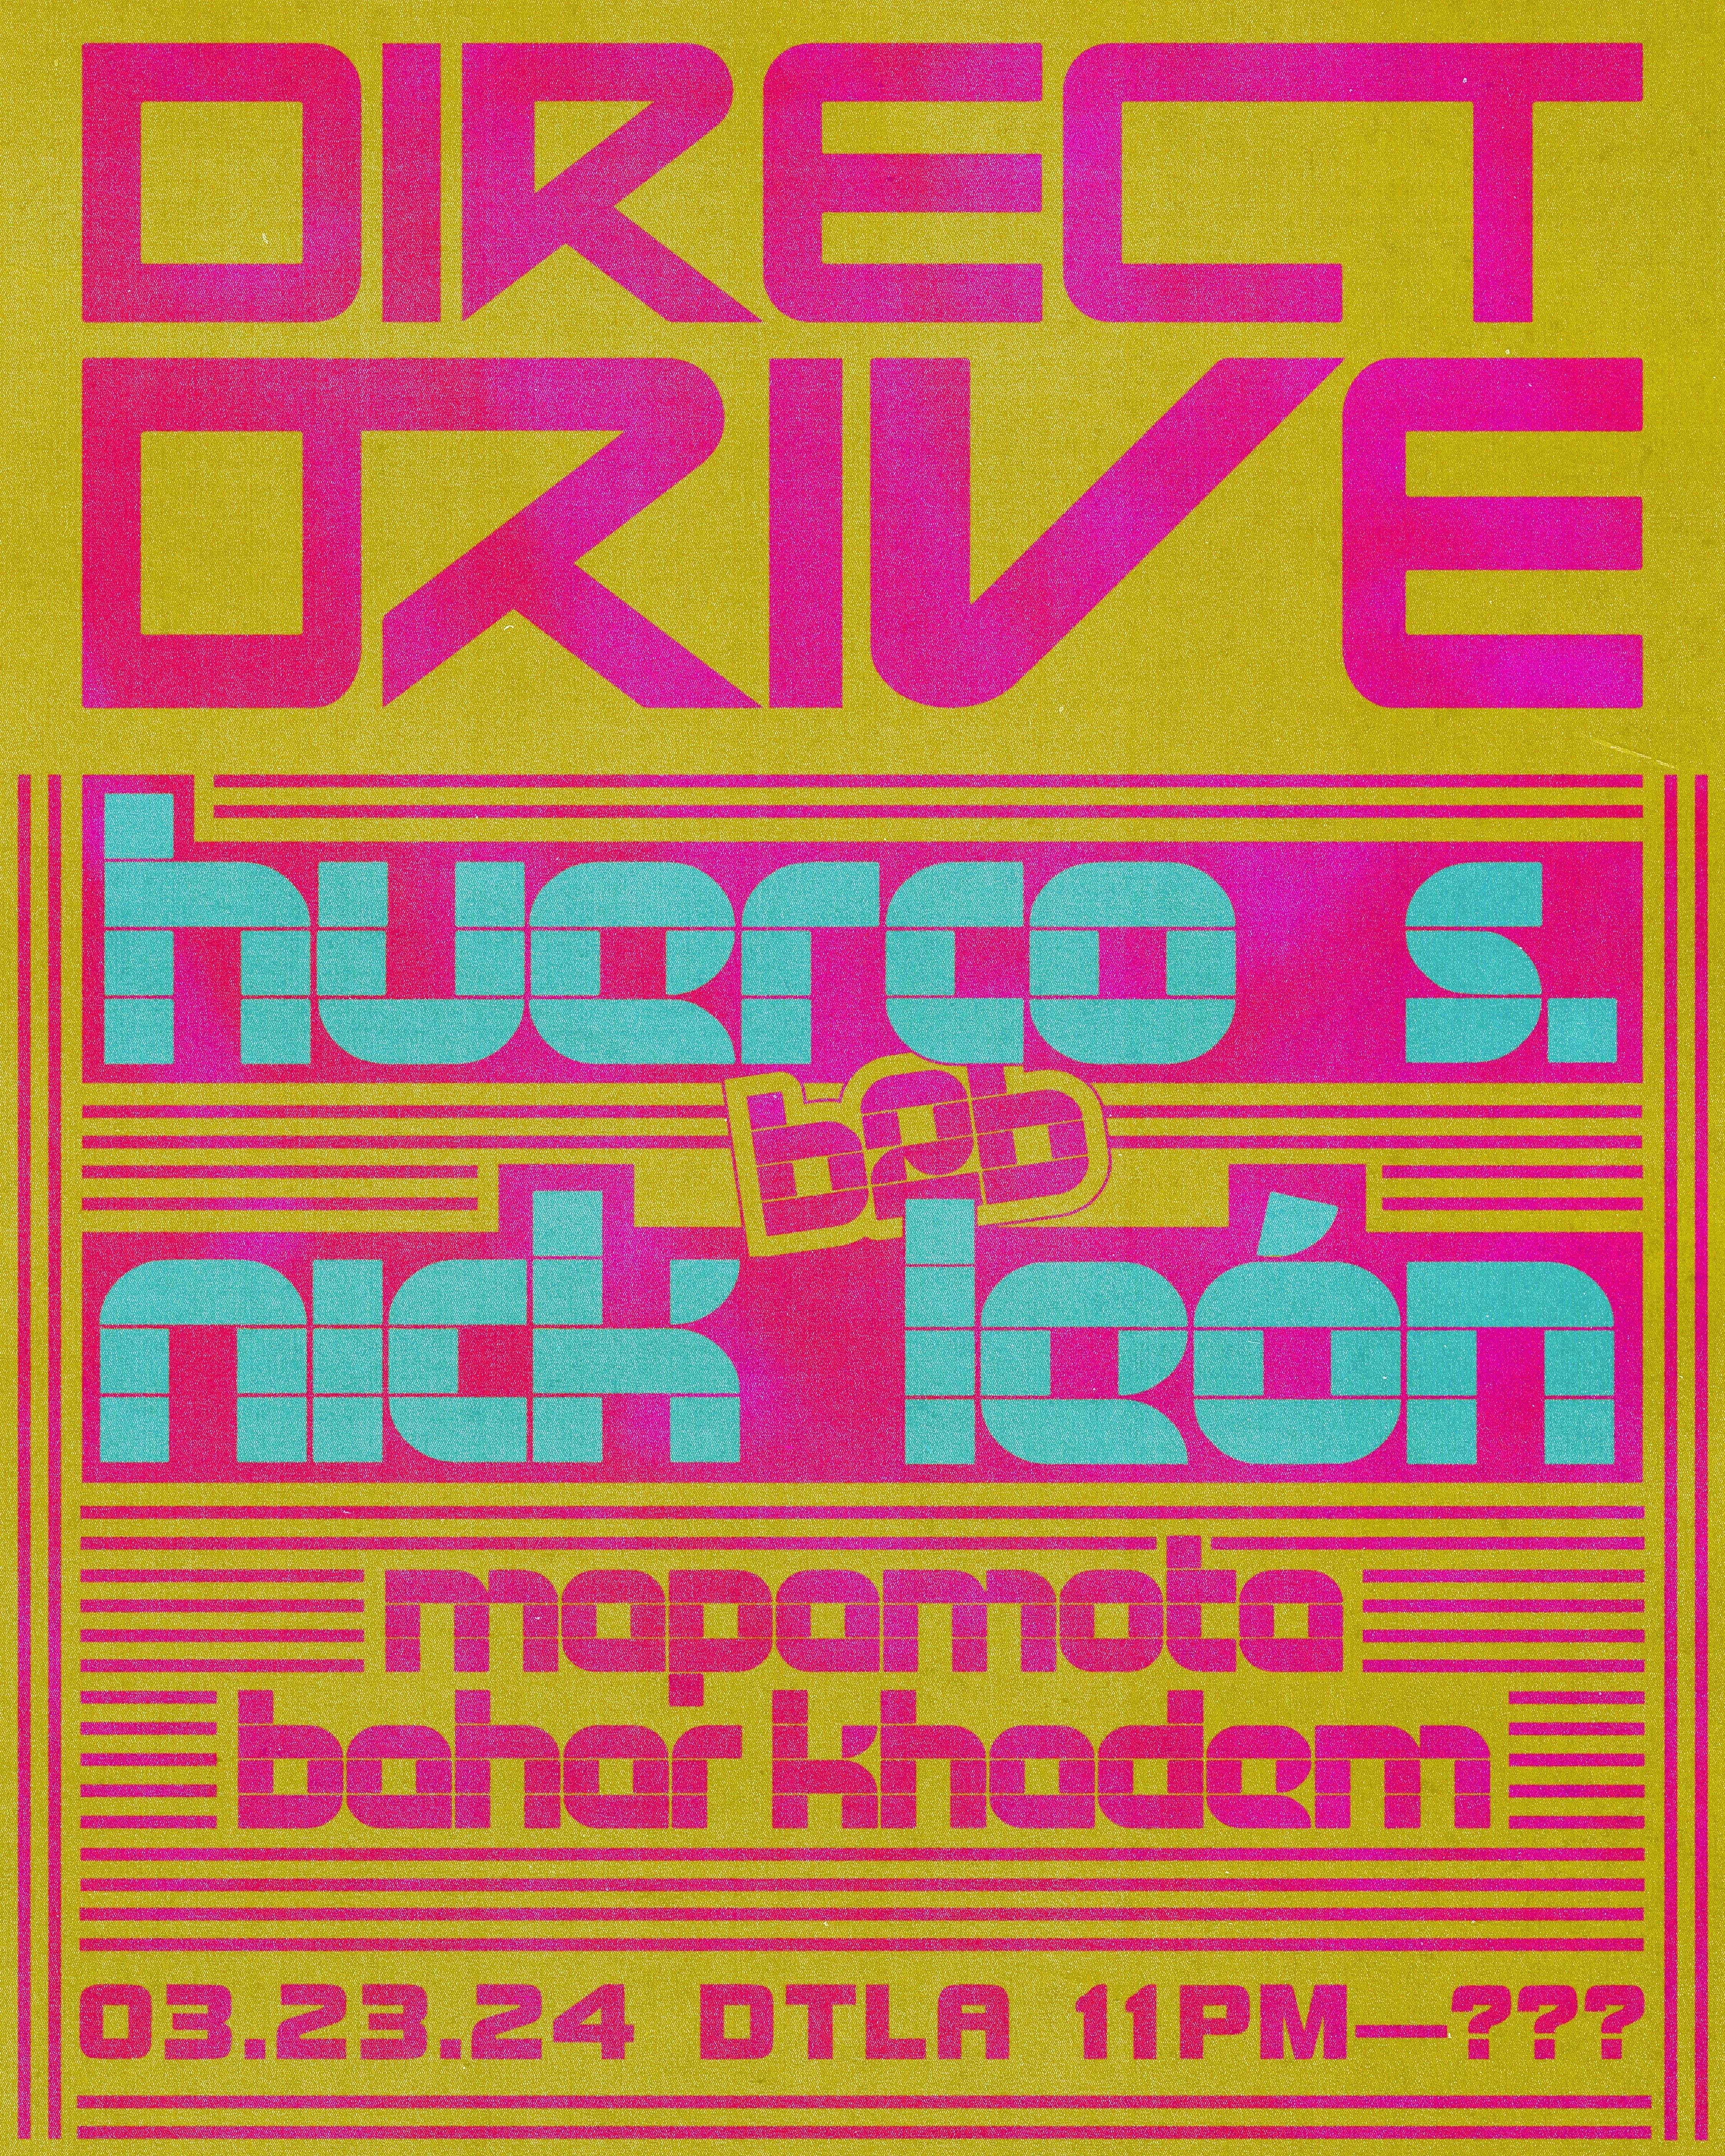 Direct Drive 1-Year Anniversary - Huerco S. b2b Nick León, Mapamota, bahar khadem - フライヤー表